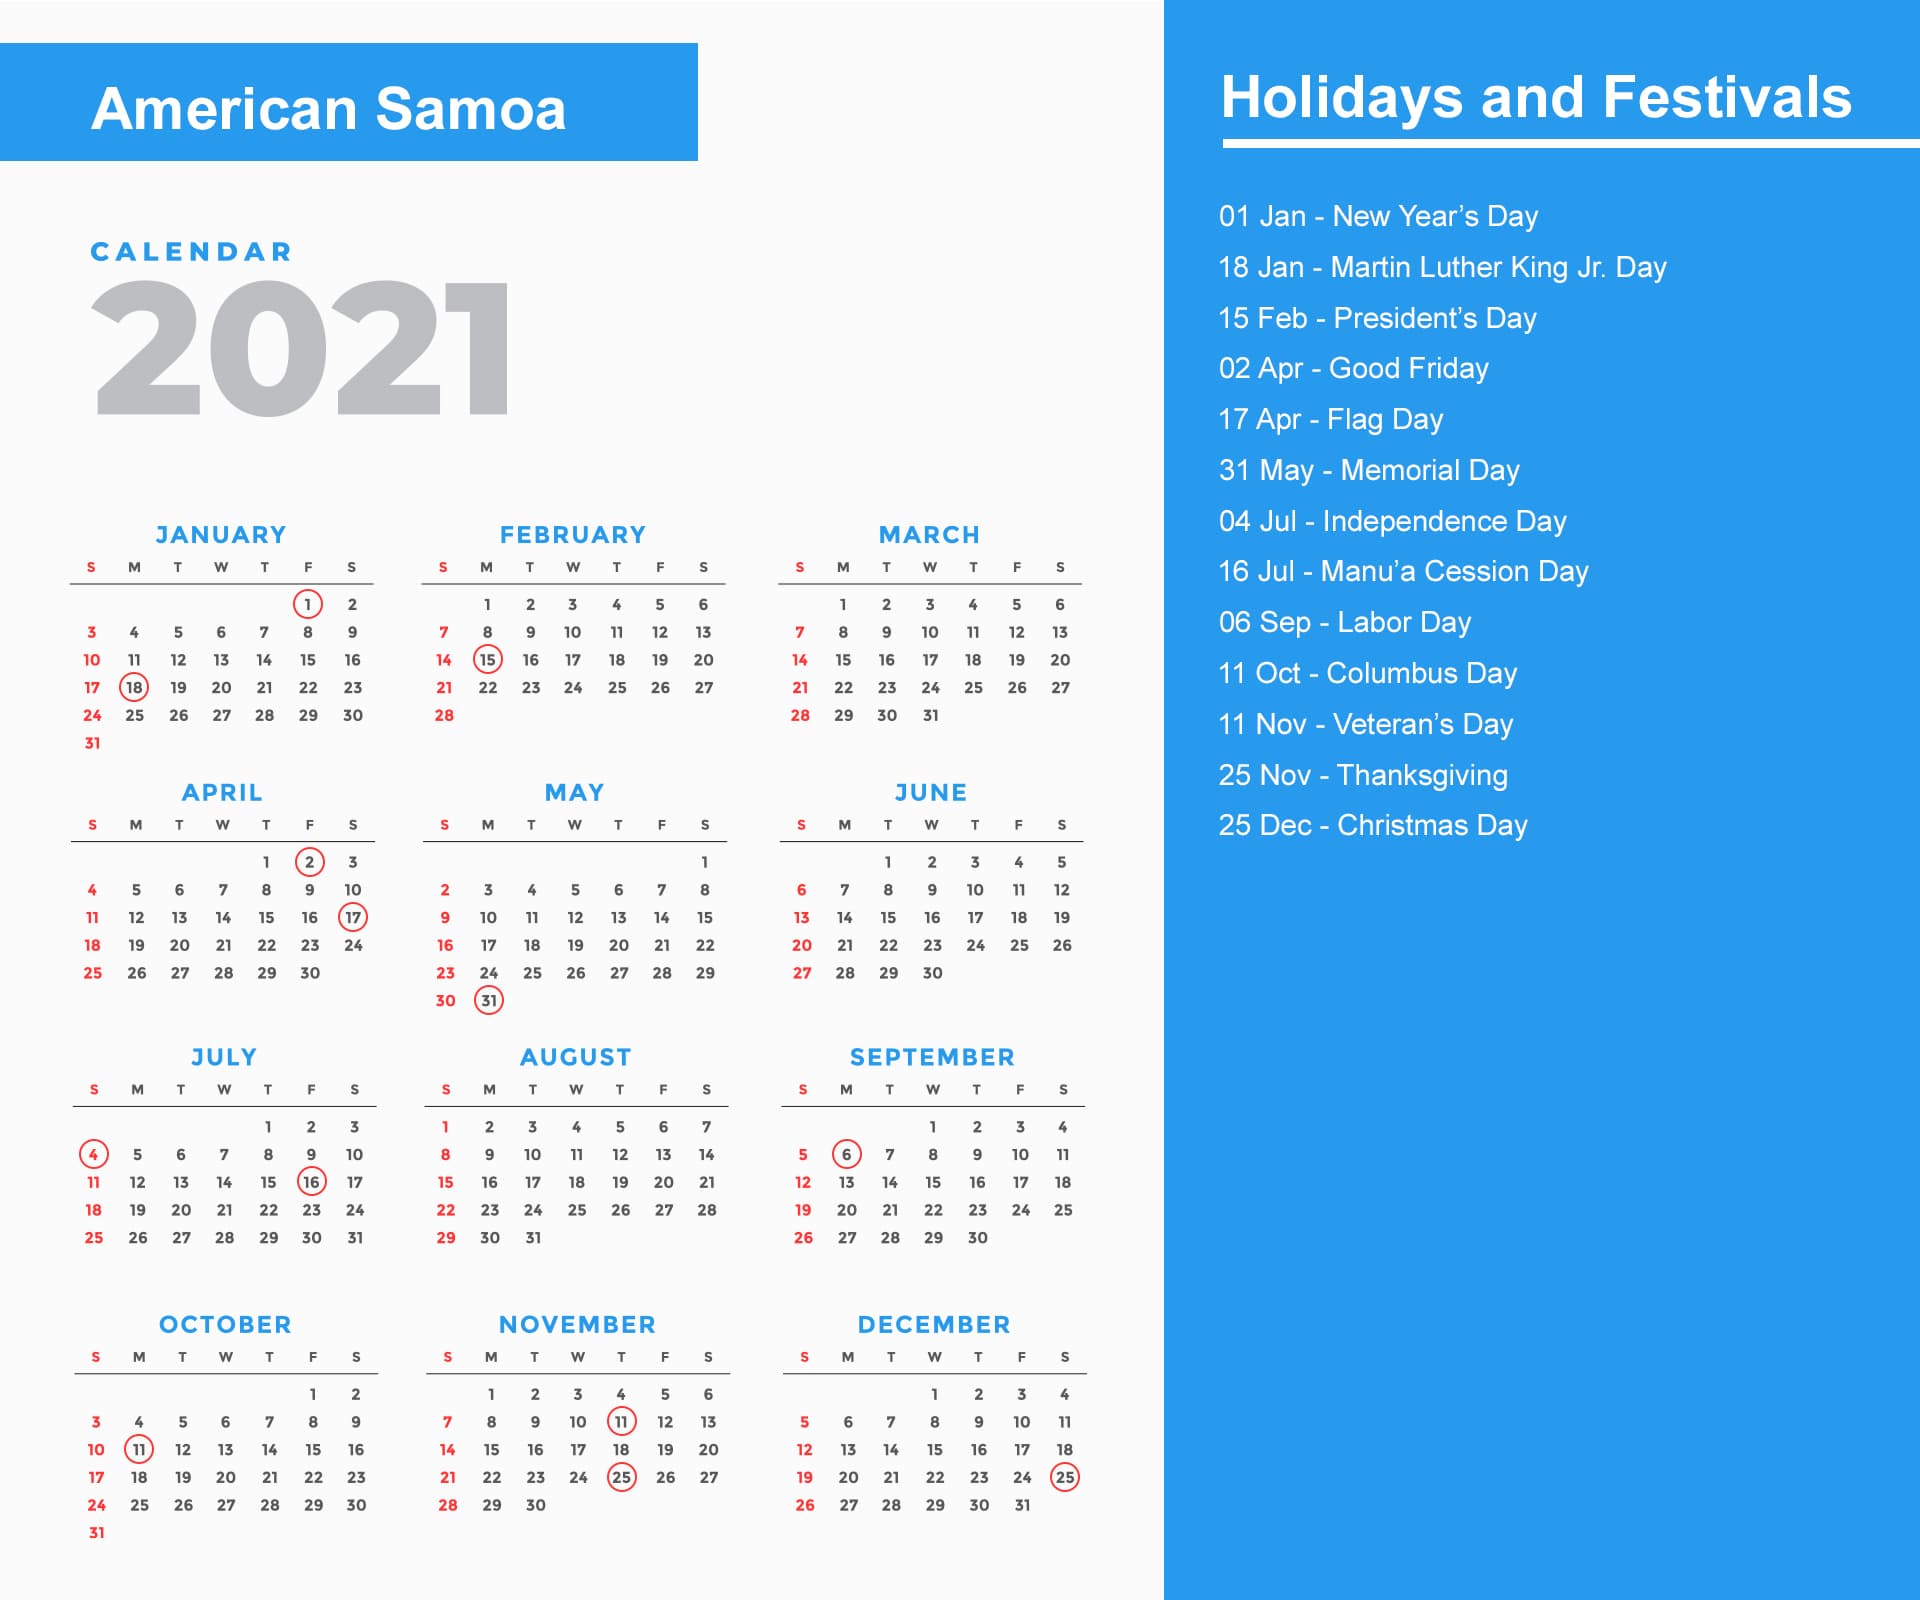 American Samoa Holidays Calendar 2021